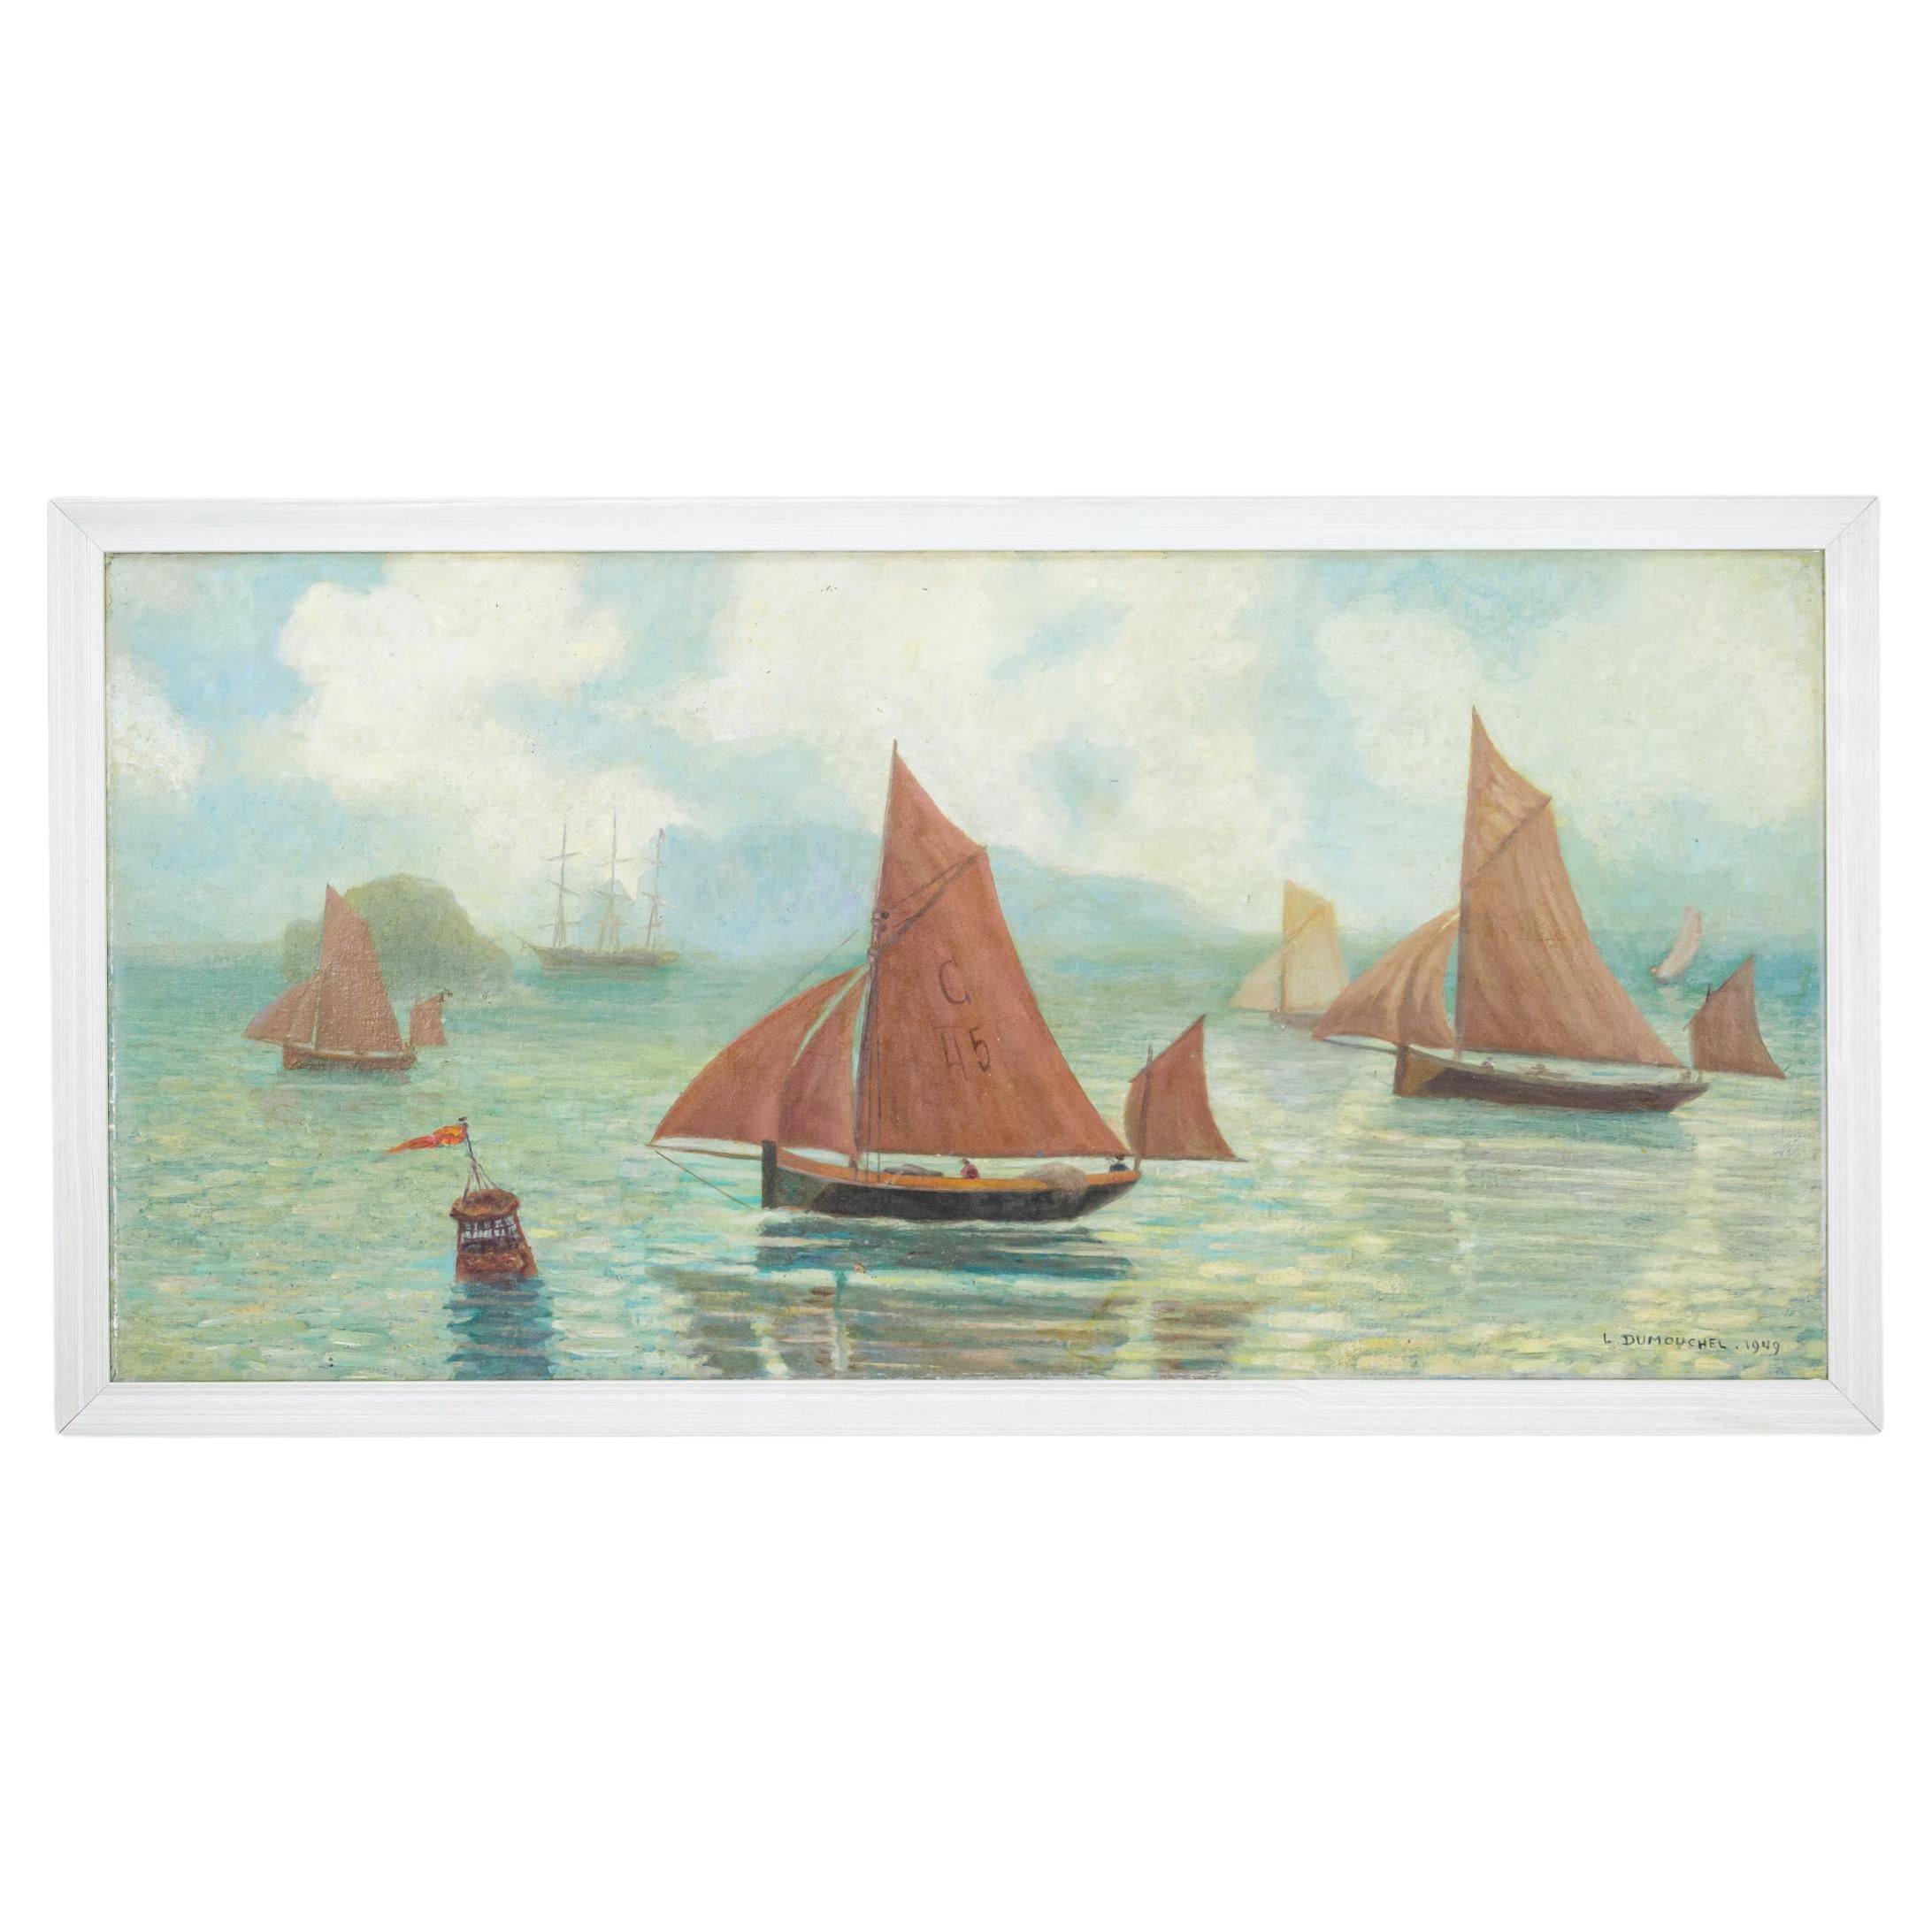 Large Oil on Canvas Sailing Dinghy Scene by L Dumouchel 1949 For Sale